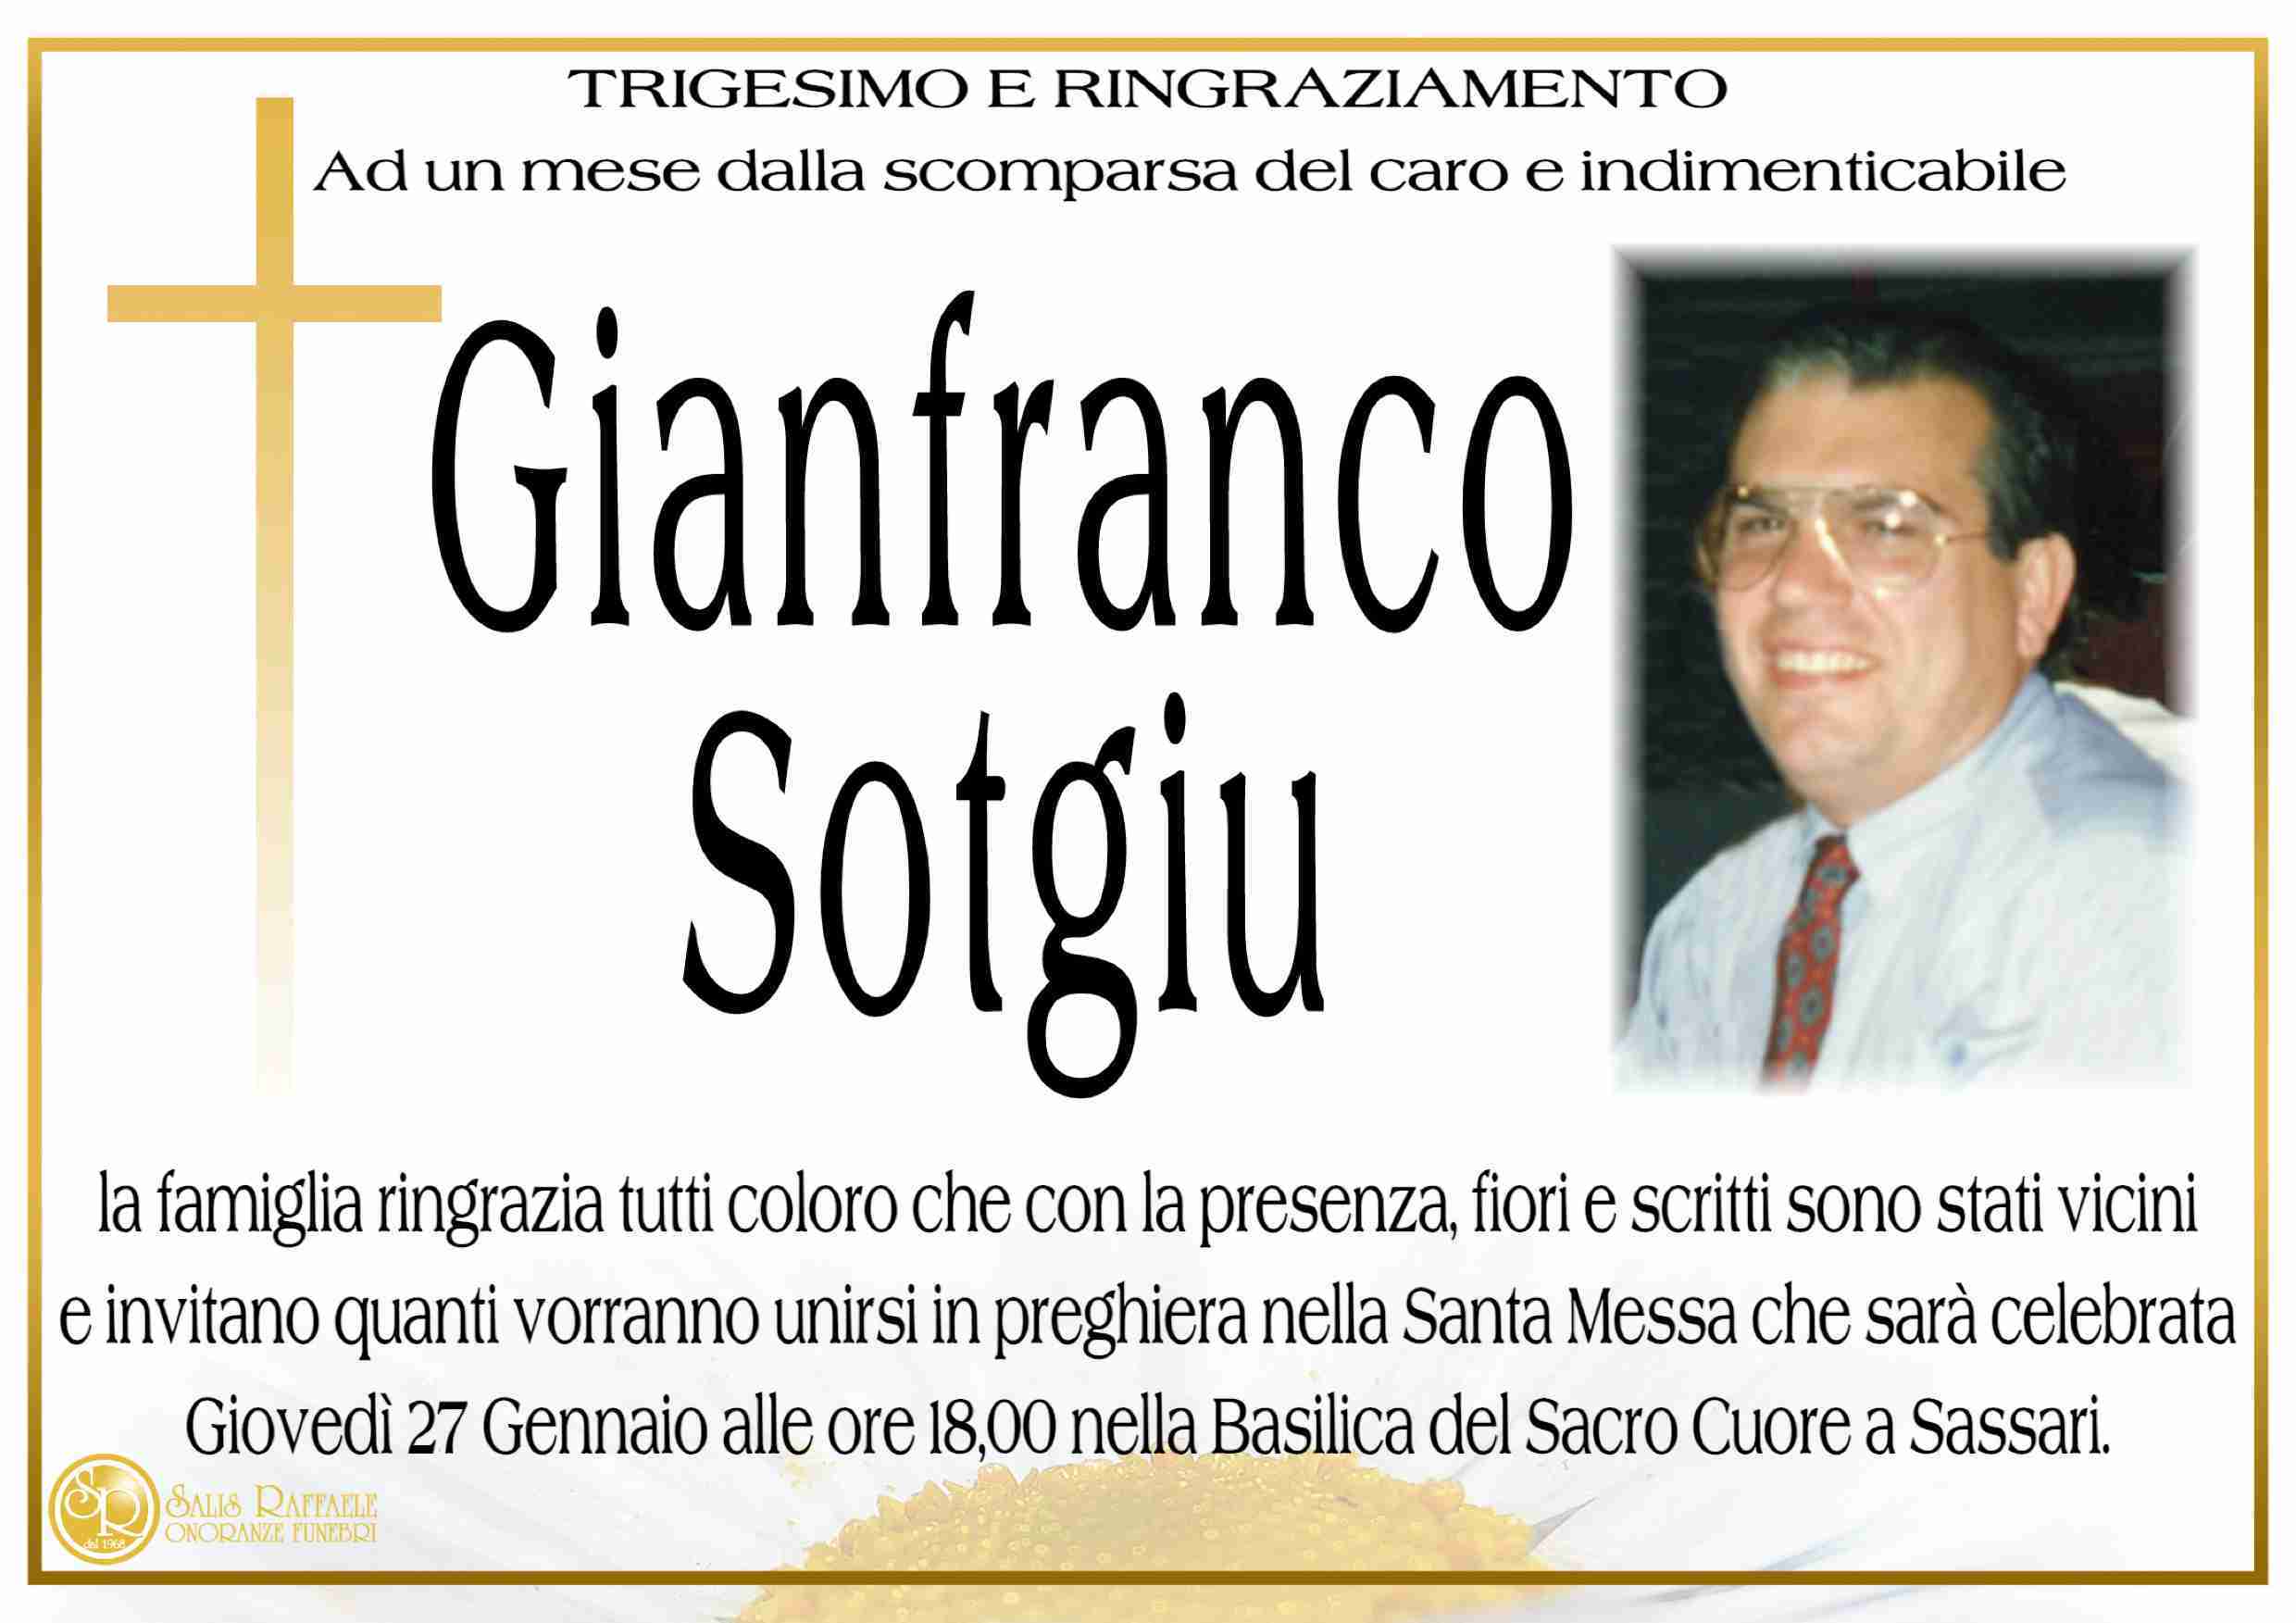 Gianfranco Sotgiu